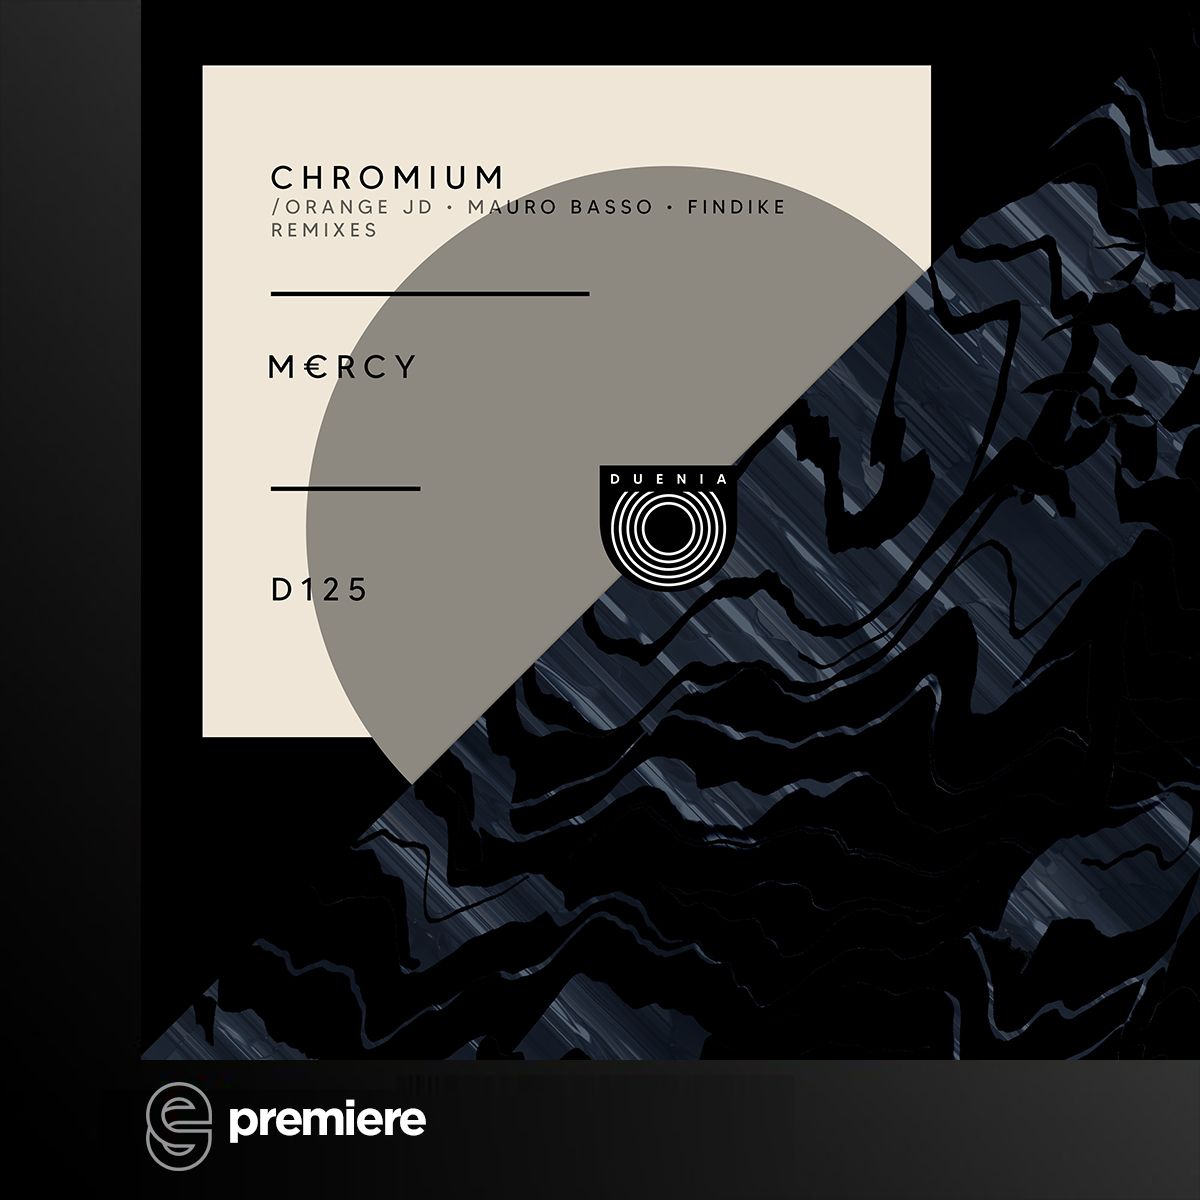 Download Premiere: M€RCY - Chromium  - Duenia